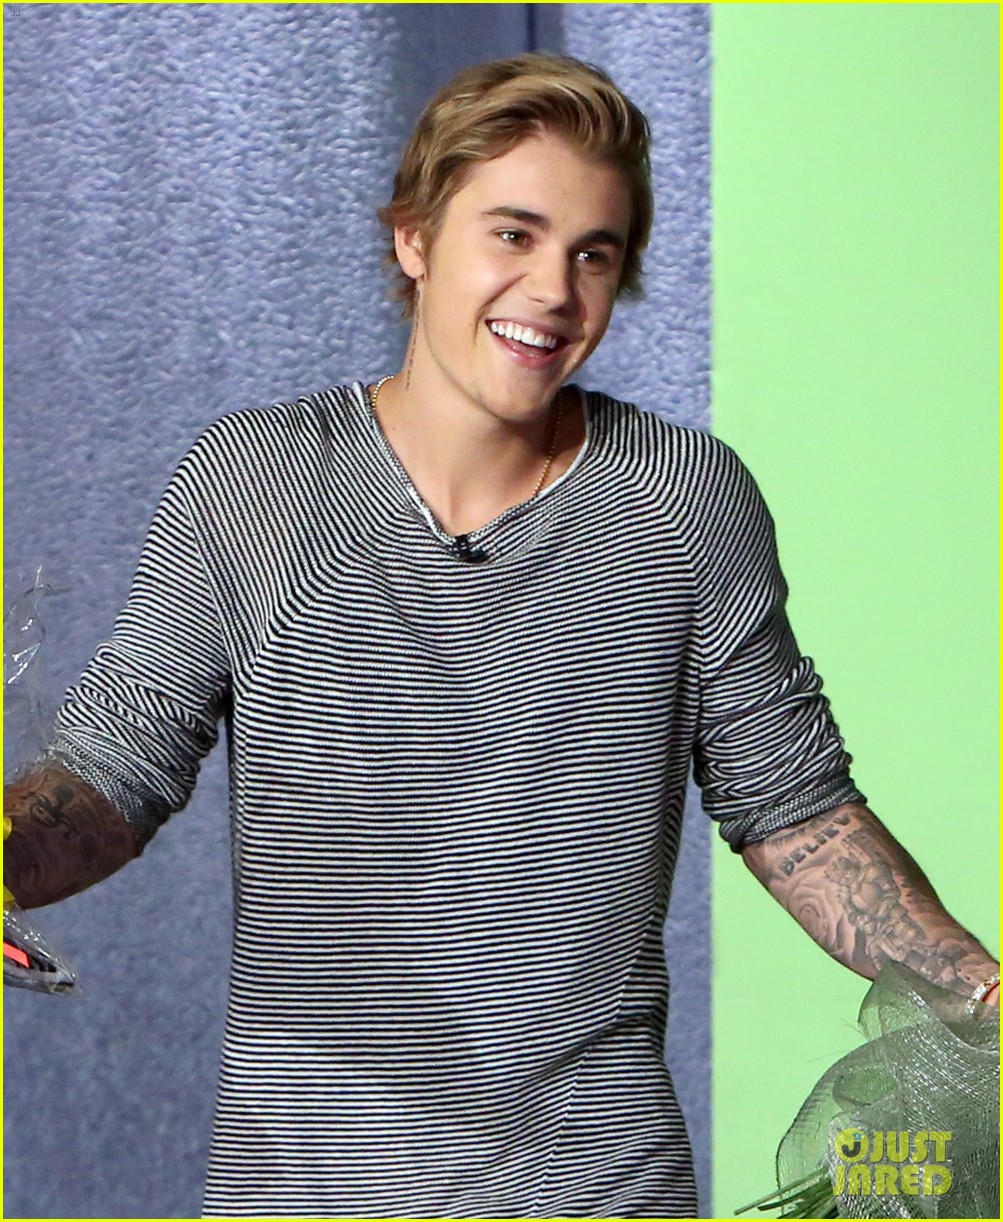 Justin Bieber Ellen Interview 2015 - Justin Bieber Ellen 2015 - HD Wallpaper 